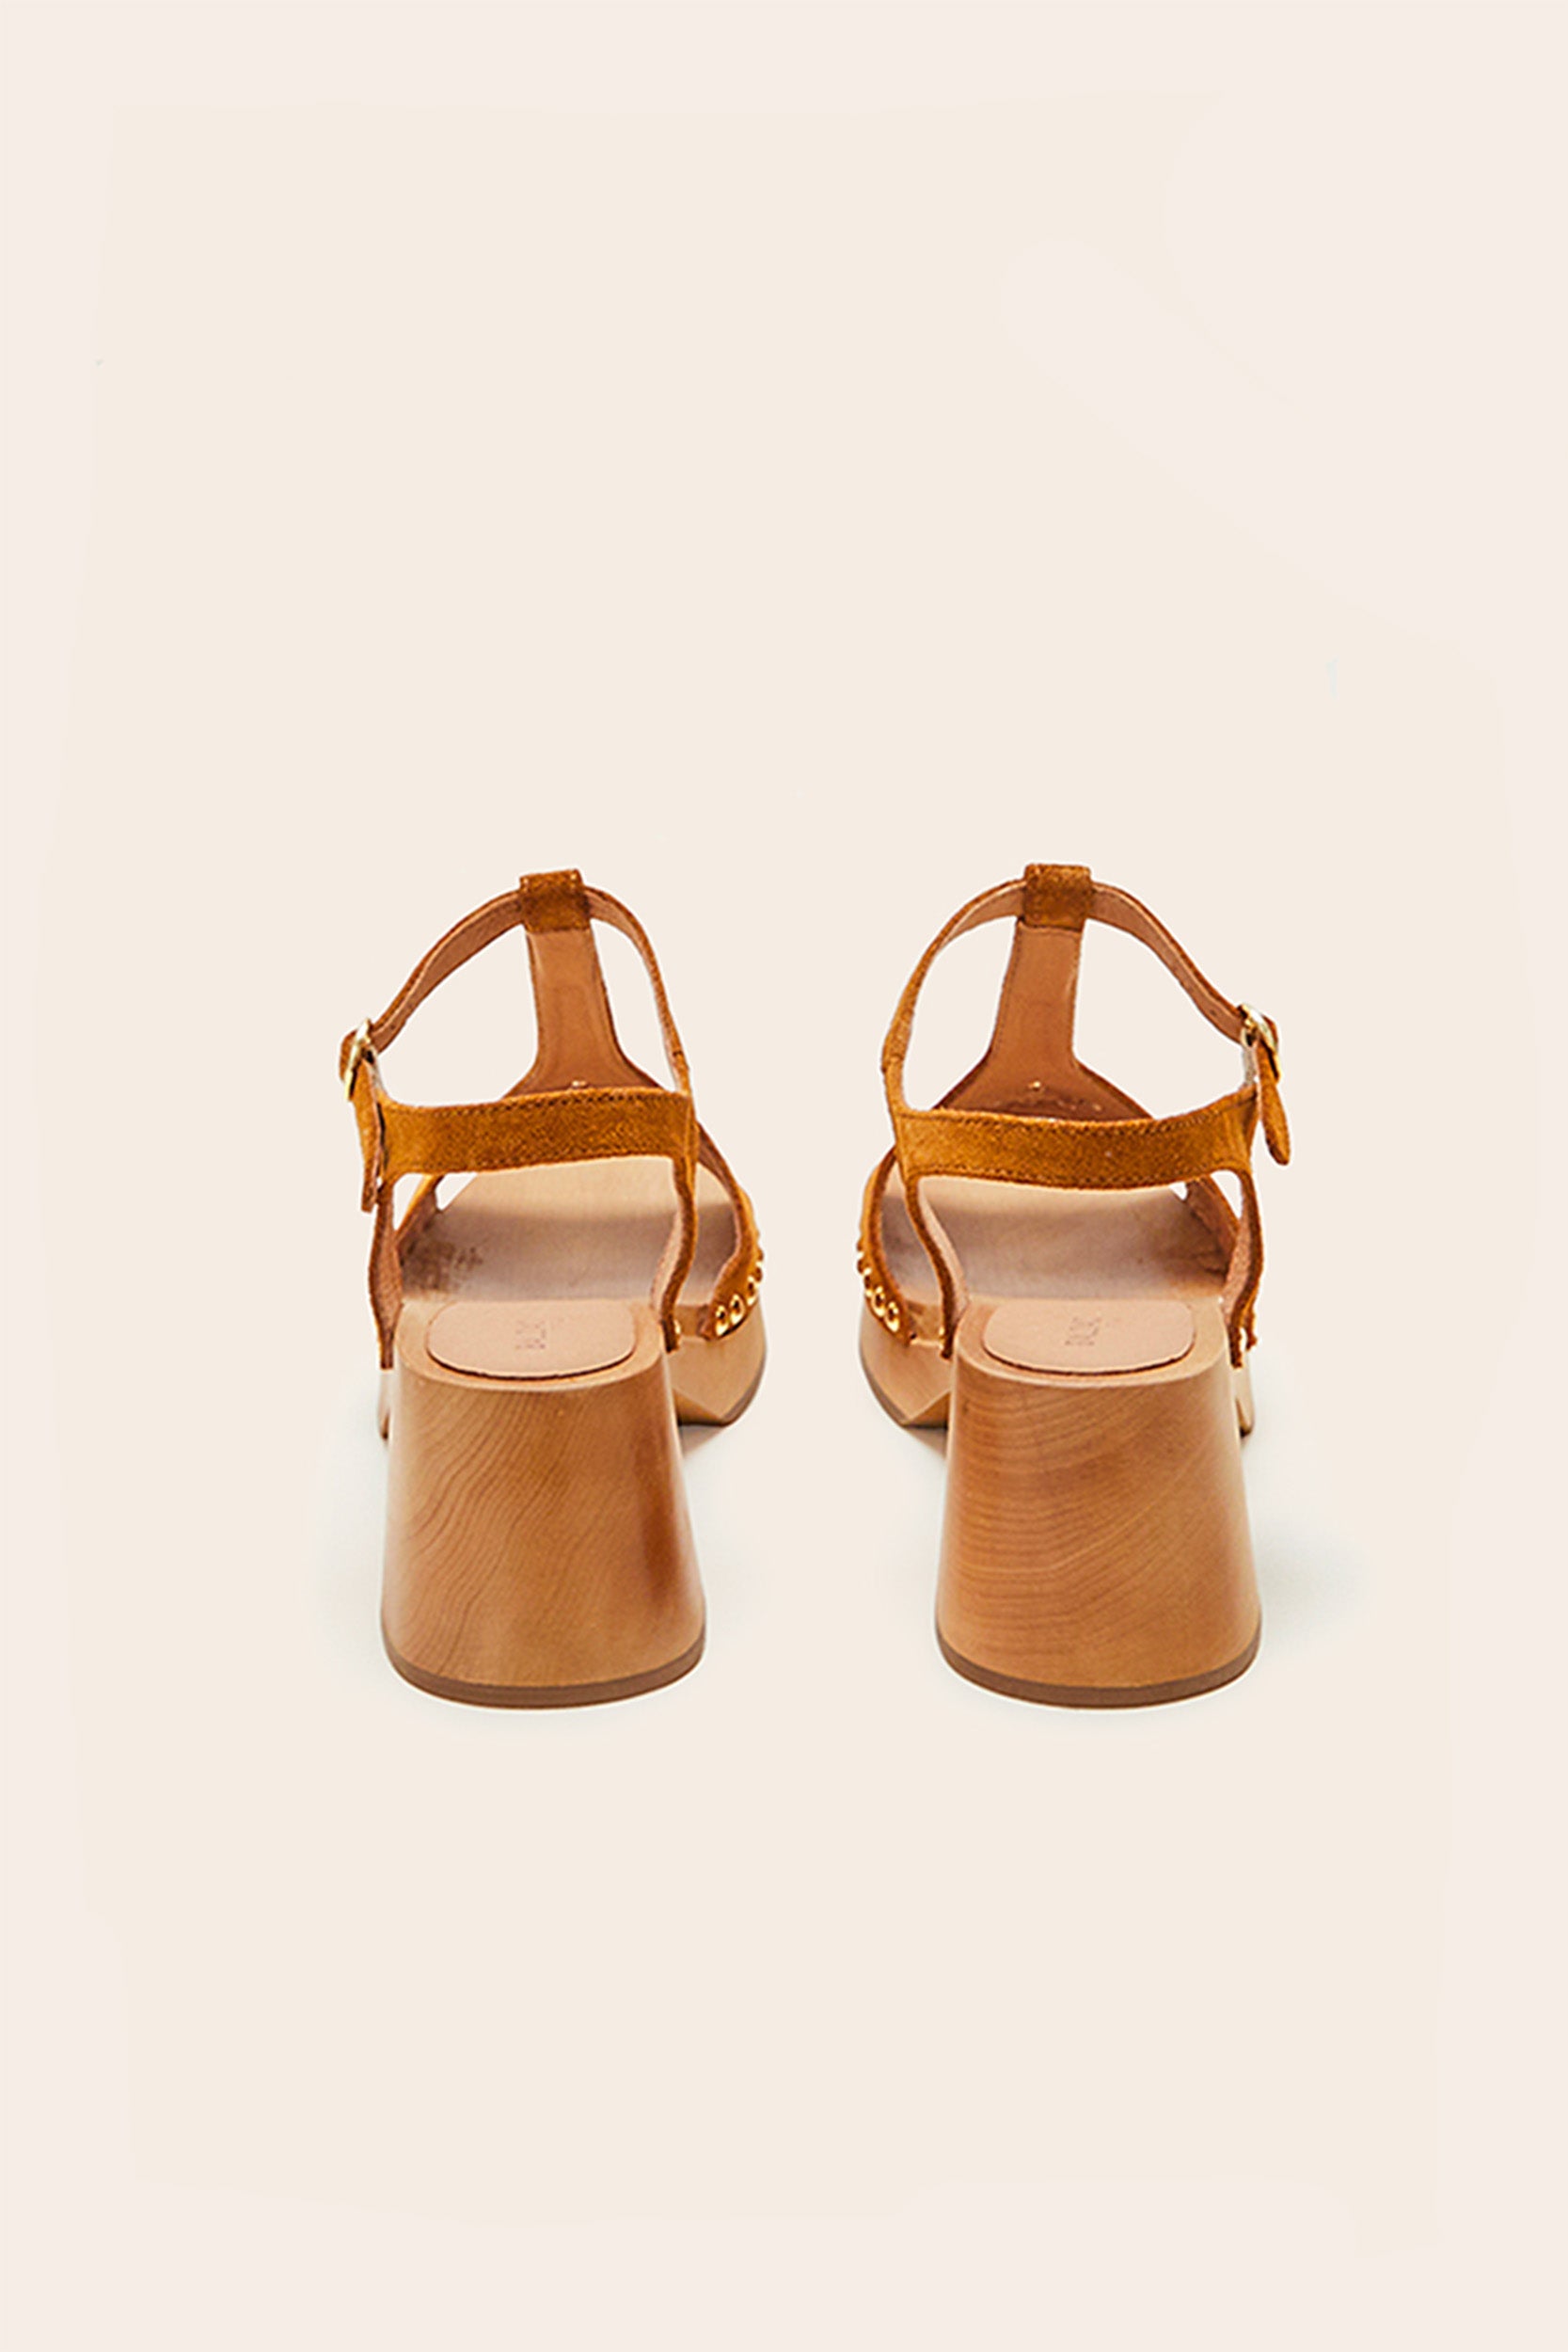 Sierra camel sandals